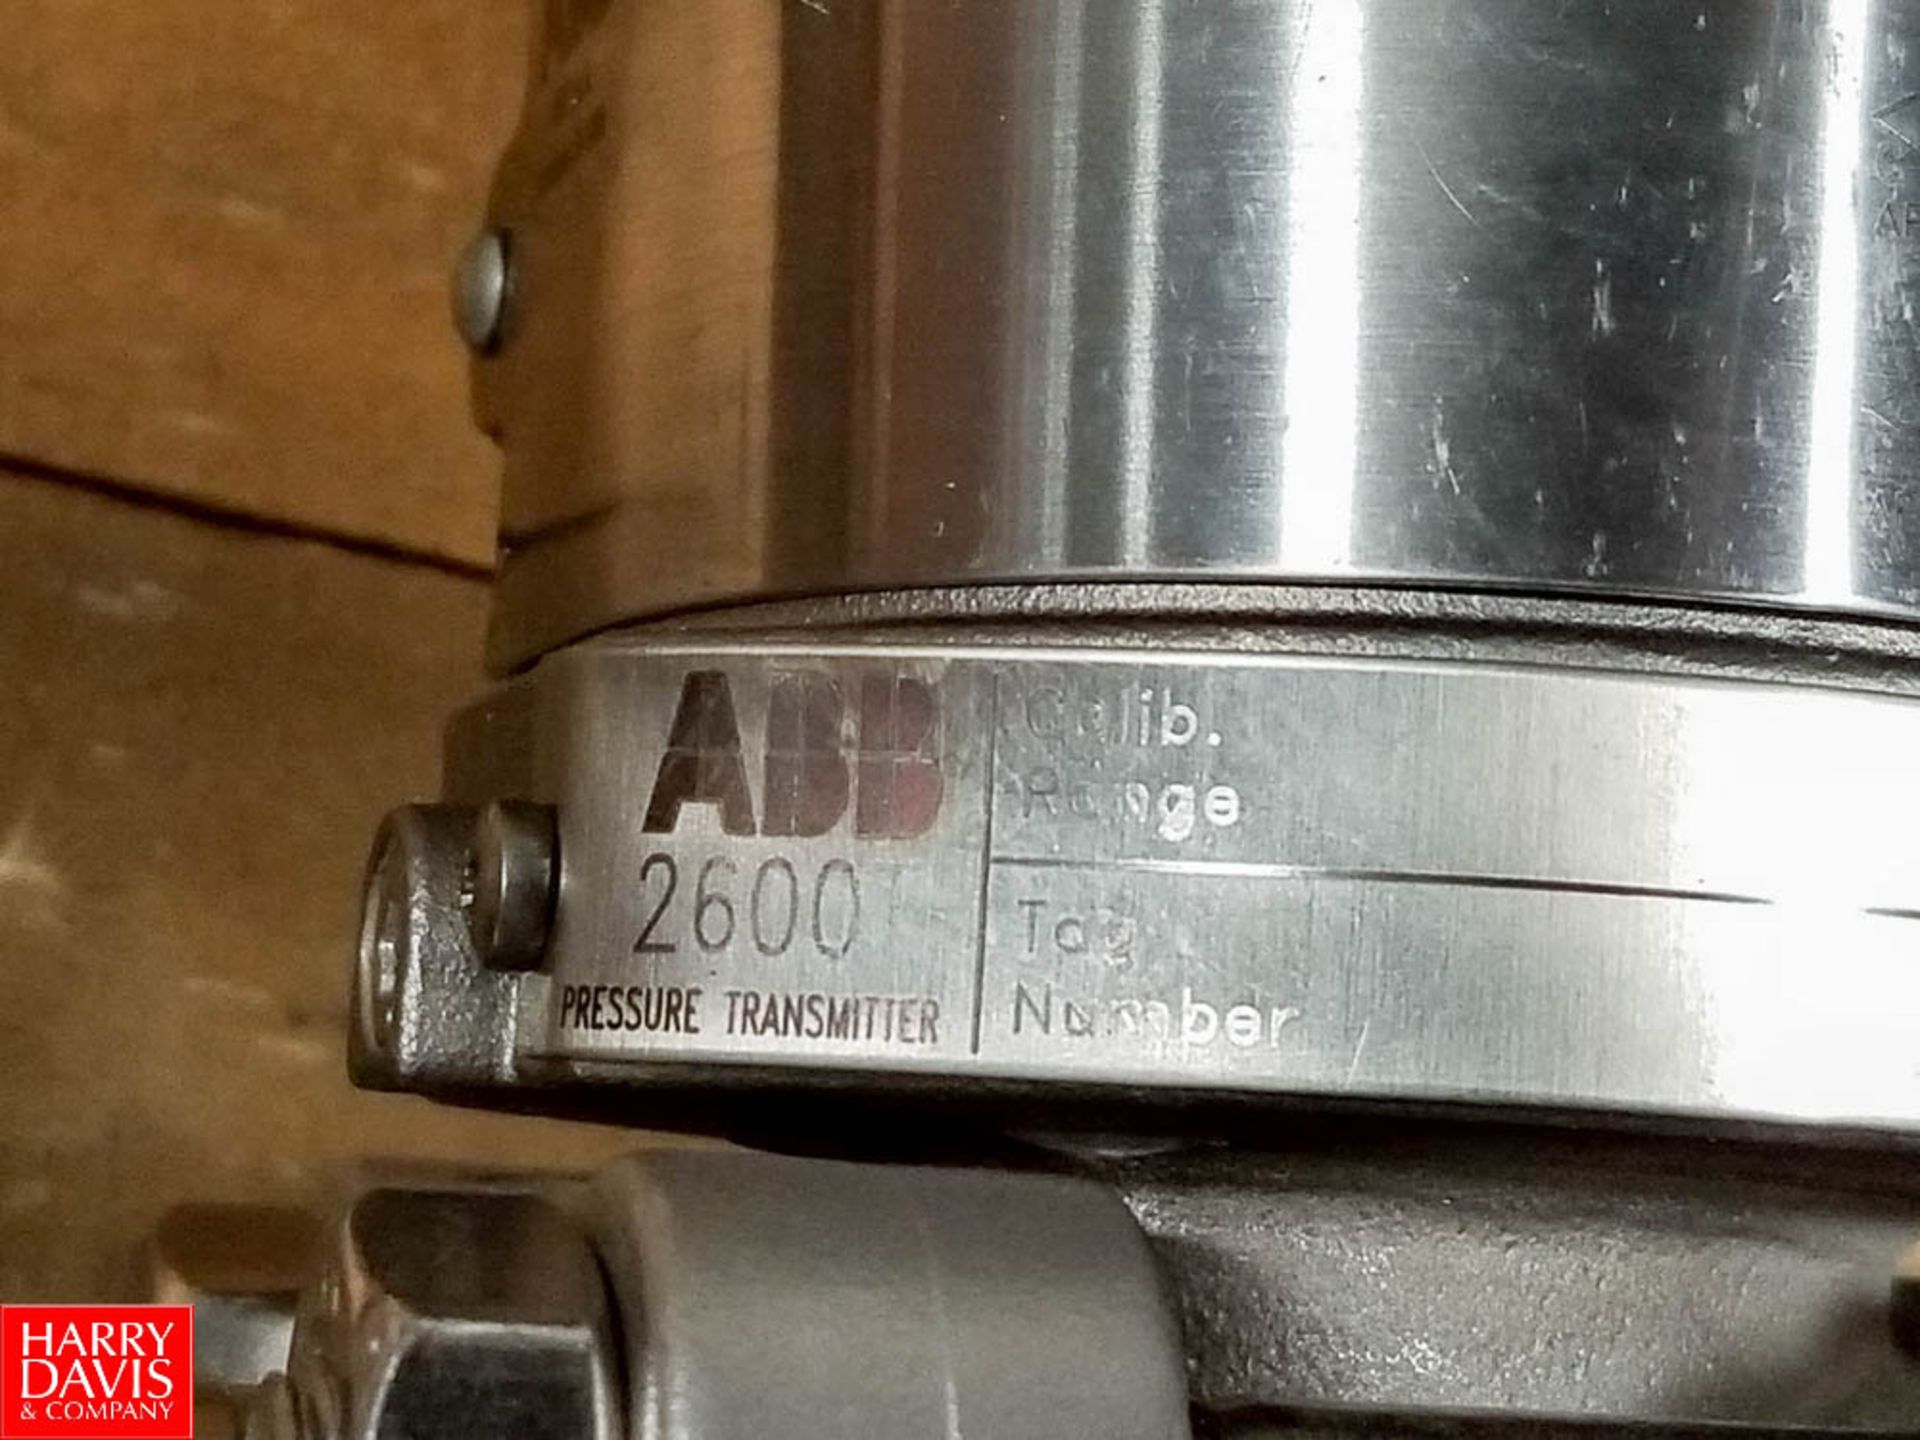 NEW ABB Pressure Transmitter Model 2600T - Rigging Fee: $25 - Image 2 of 2